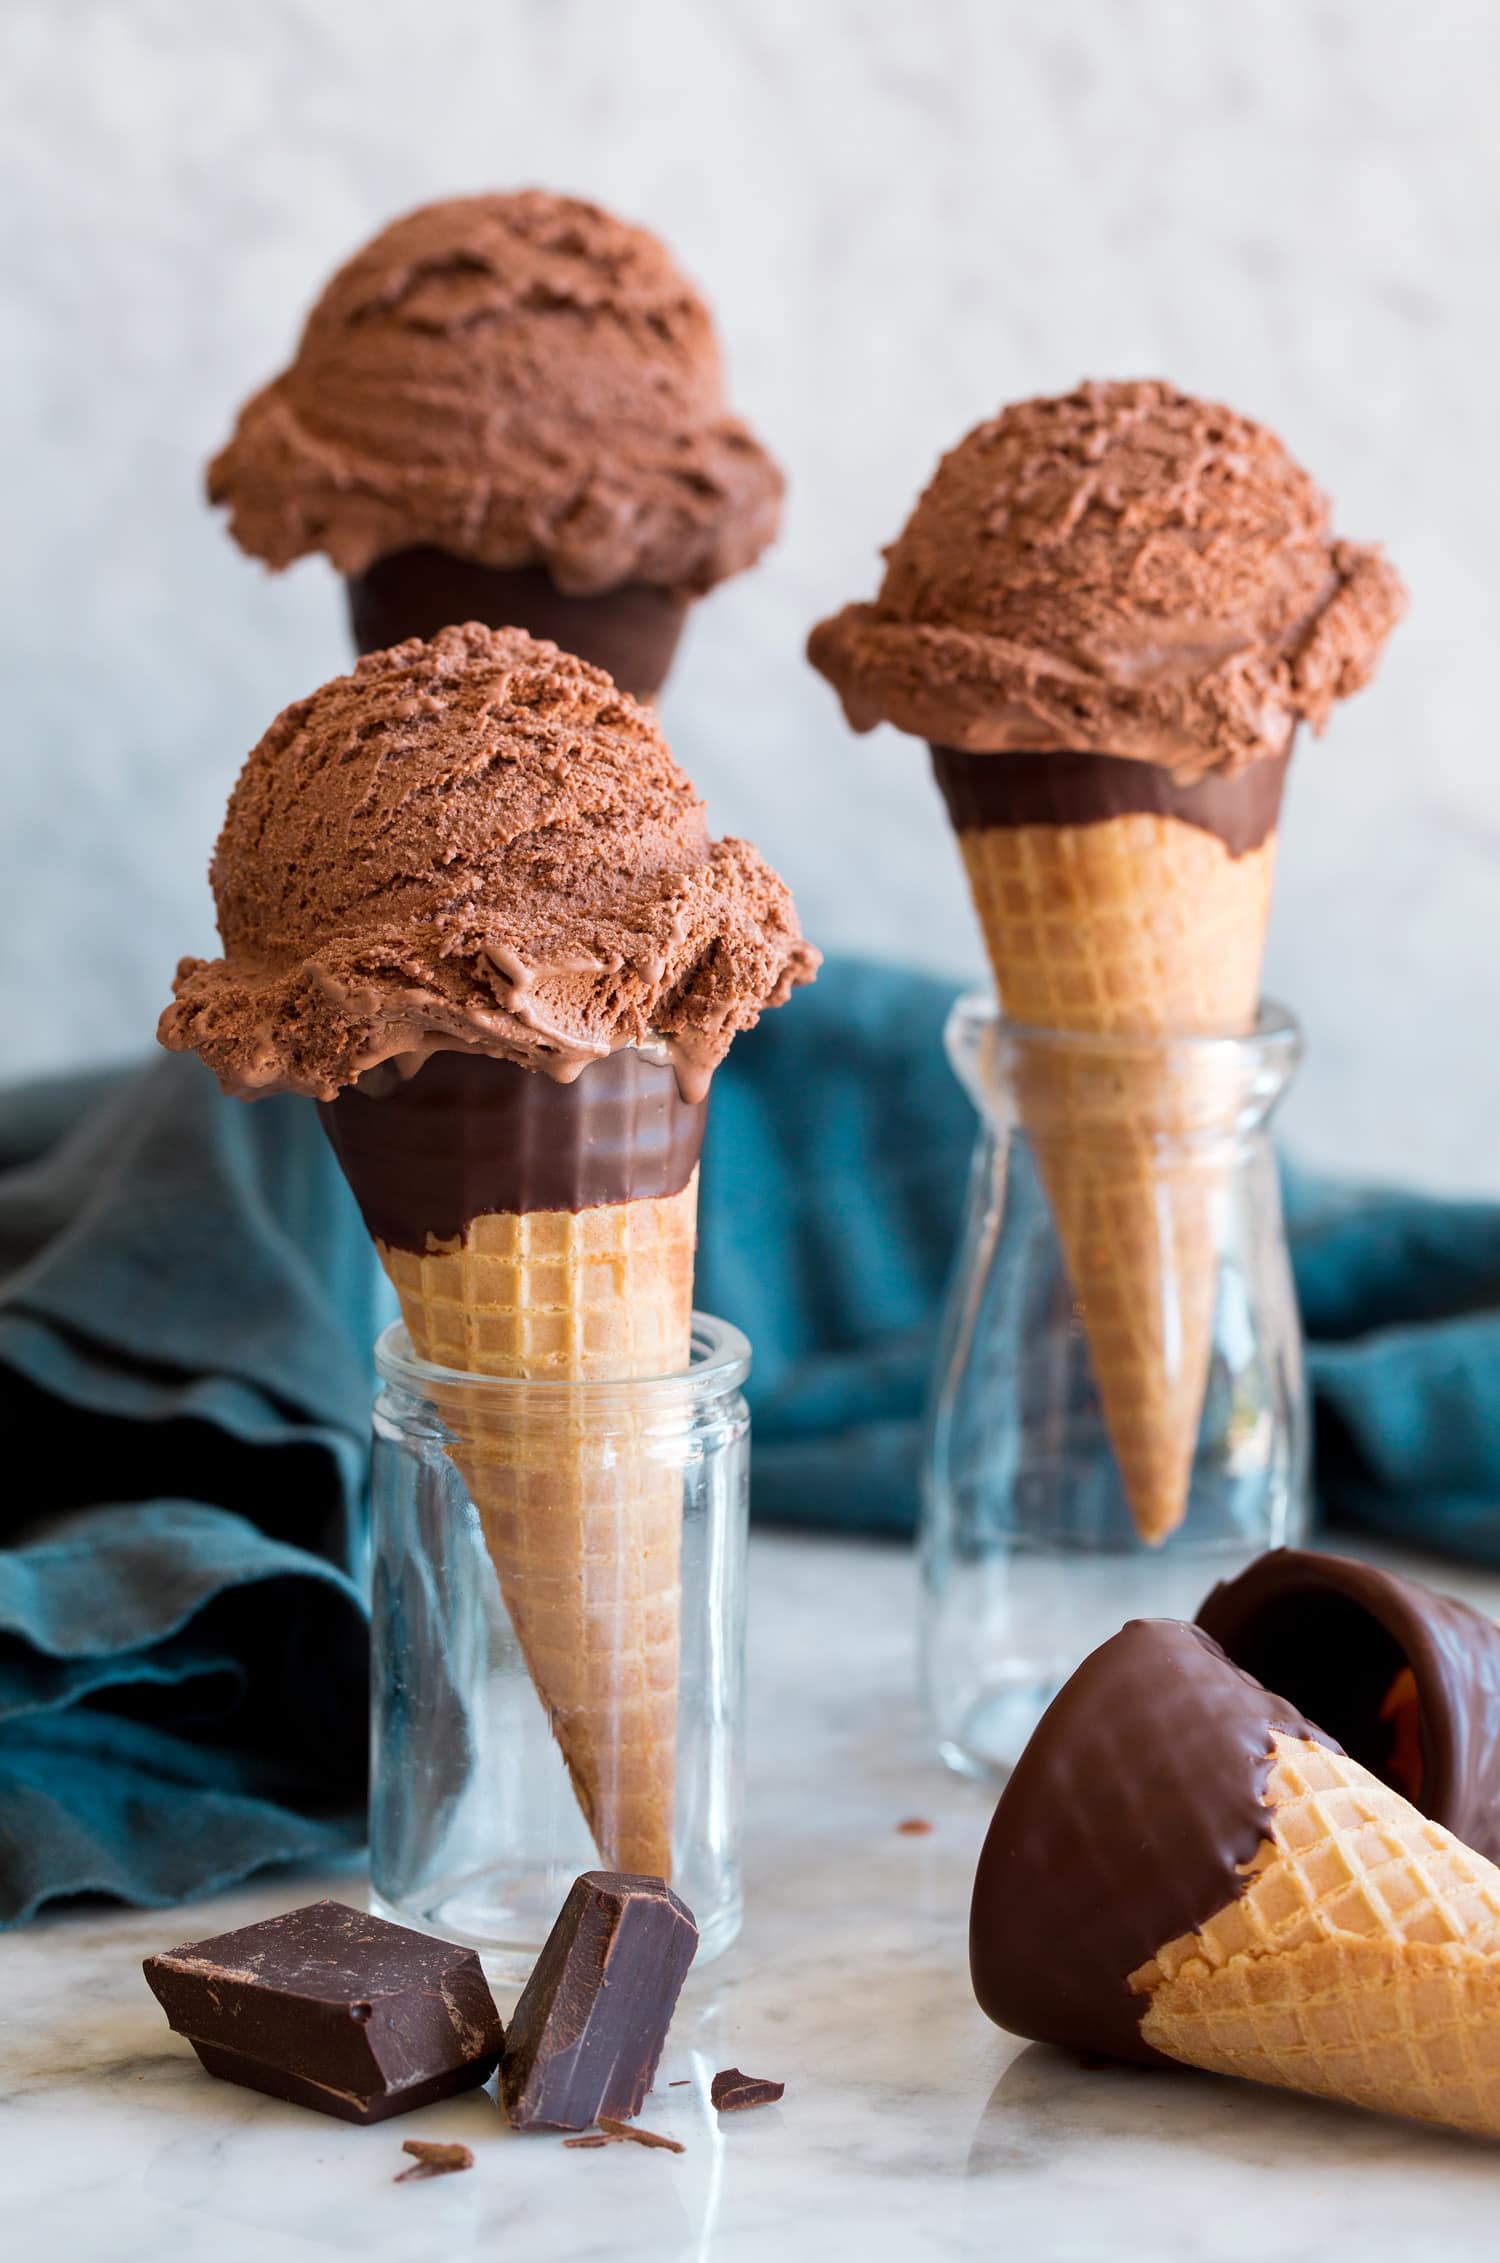 Three servings of chocolate ice cream on sugar cones.